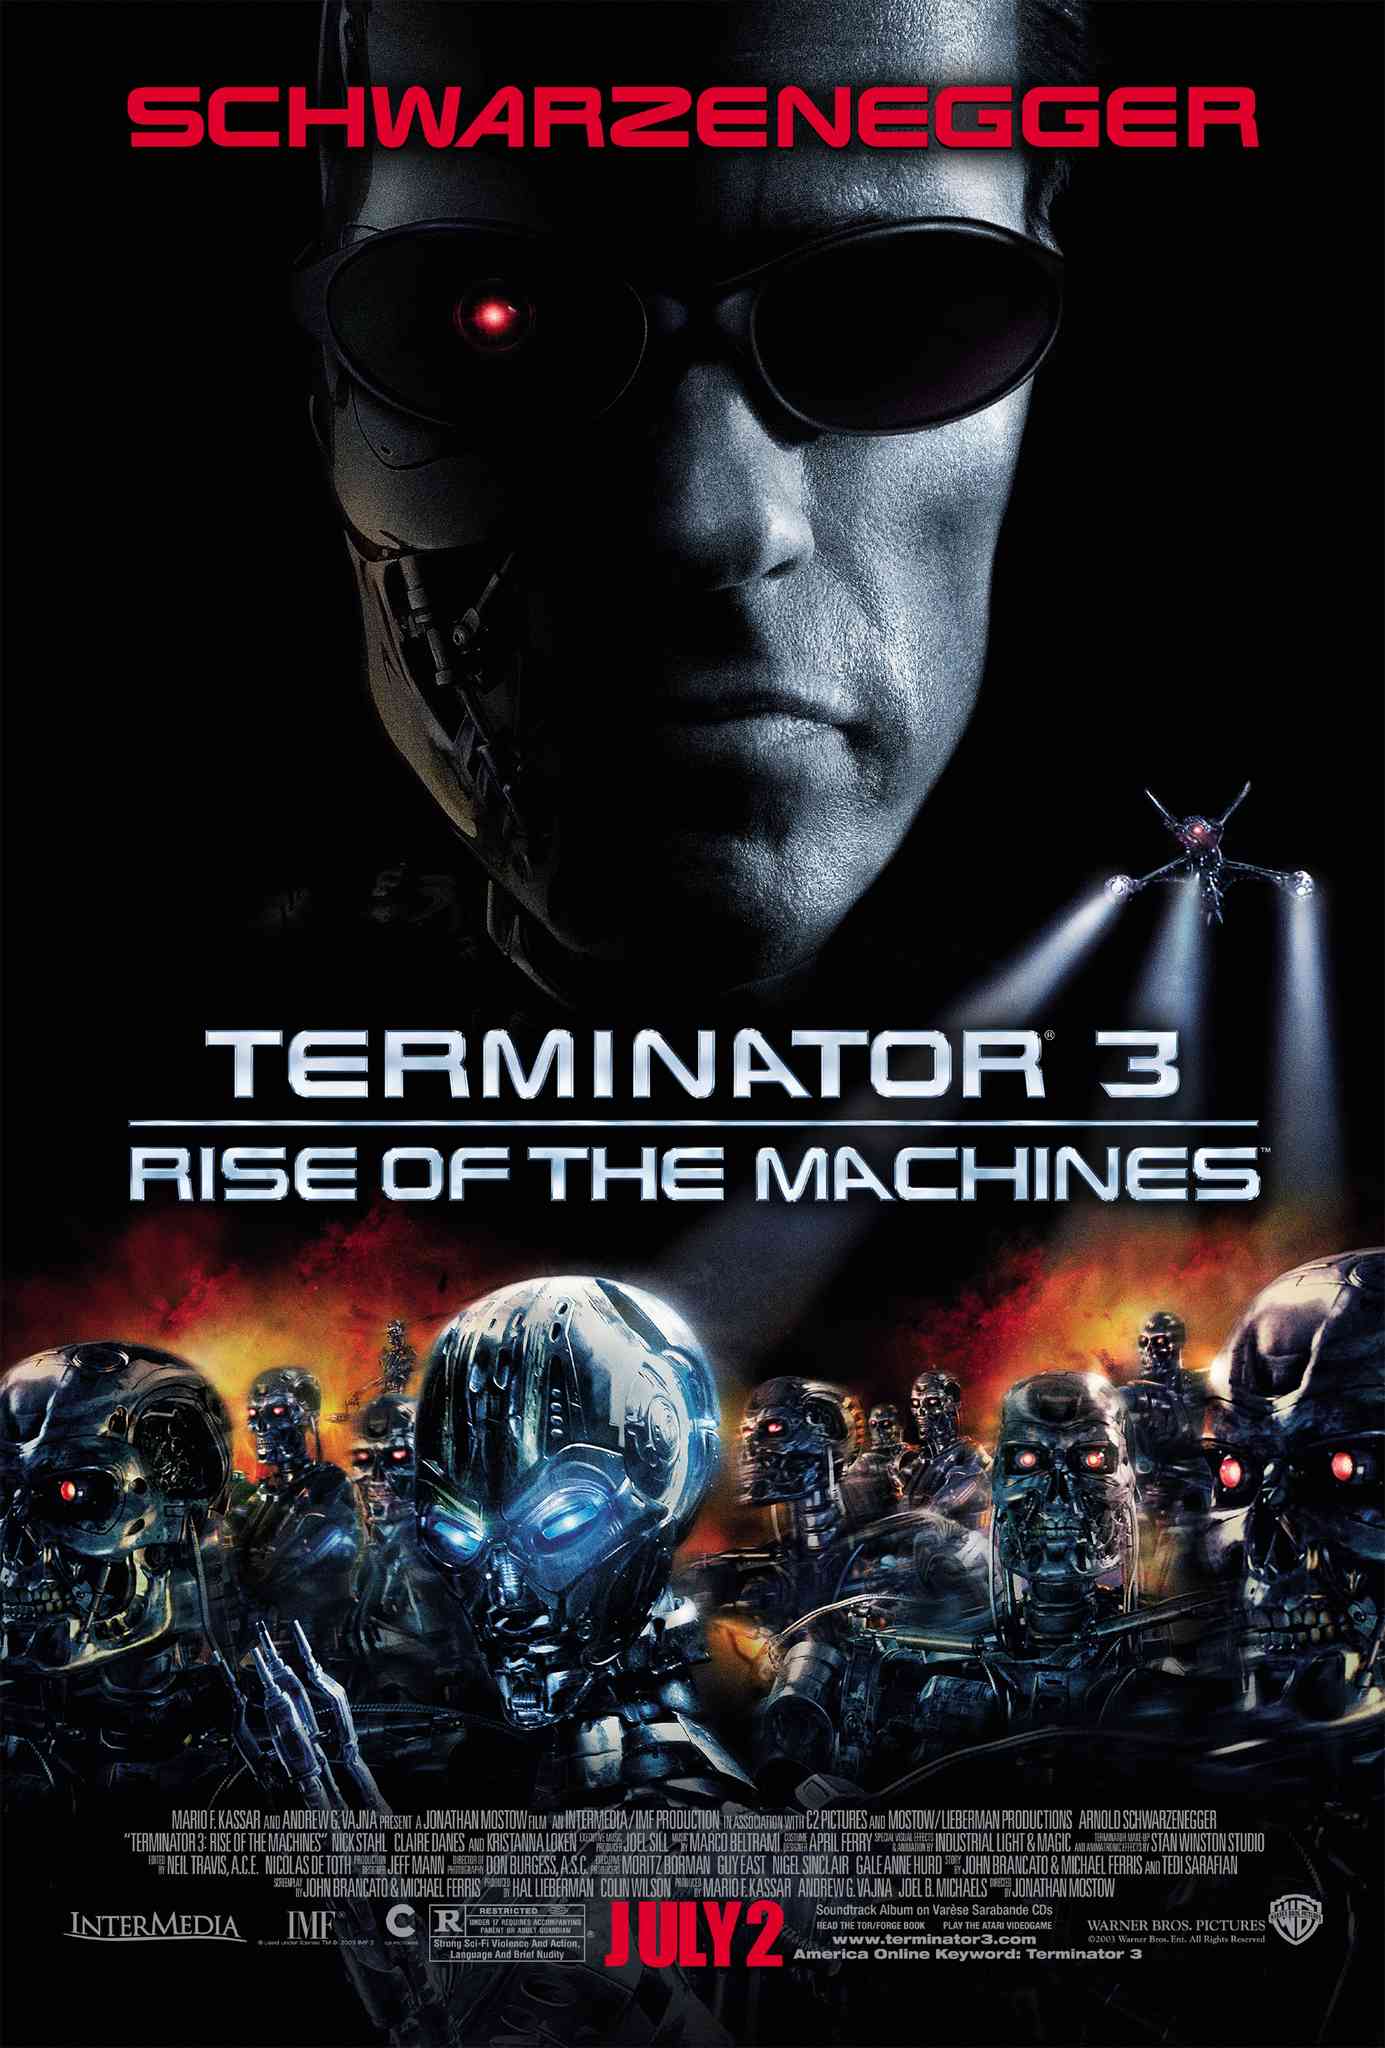 FULL MOVIE: Terminator 3: Rise of the Machines (2003)